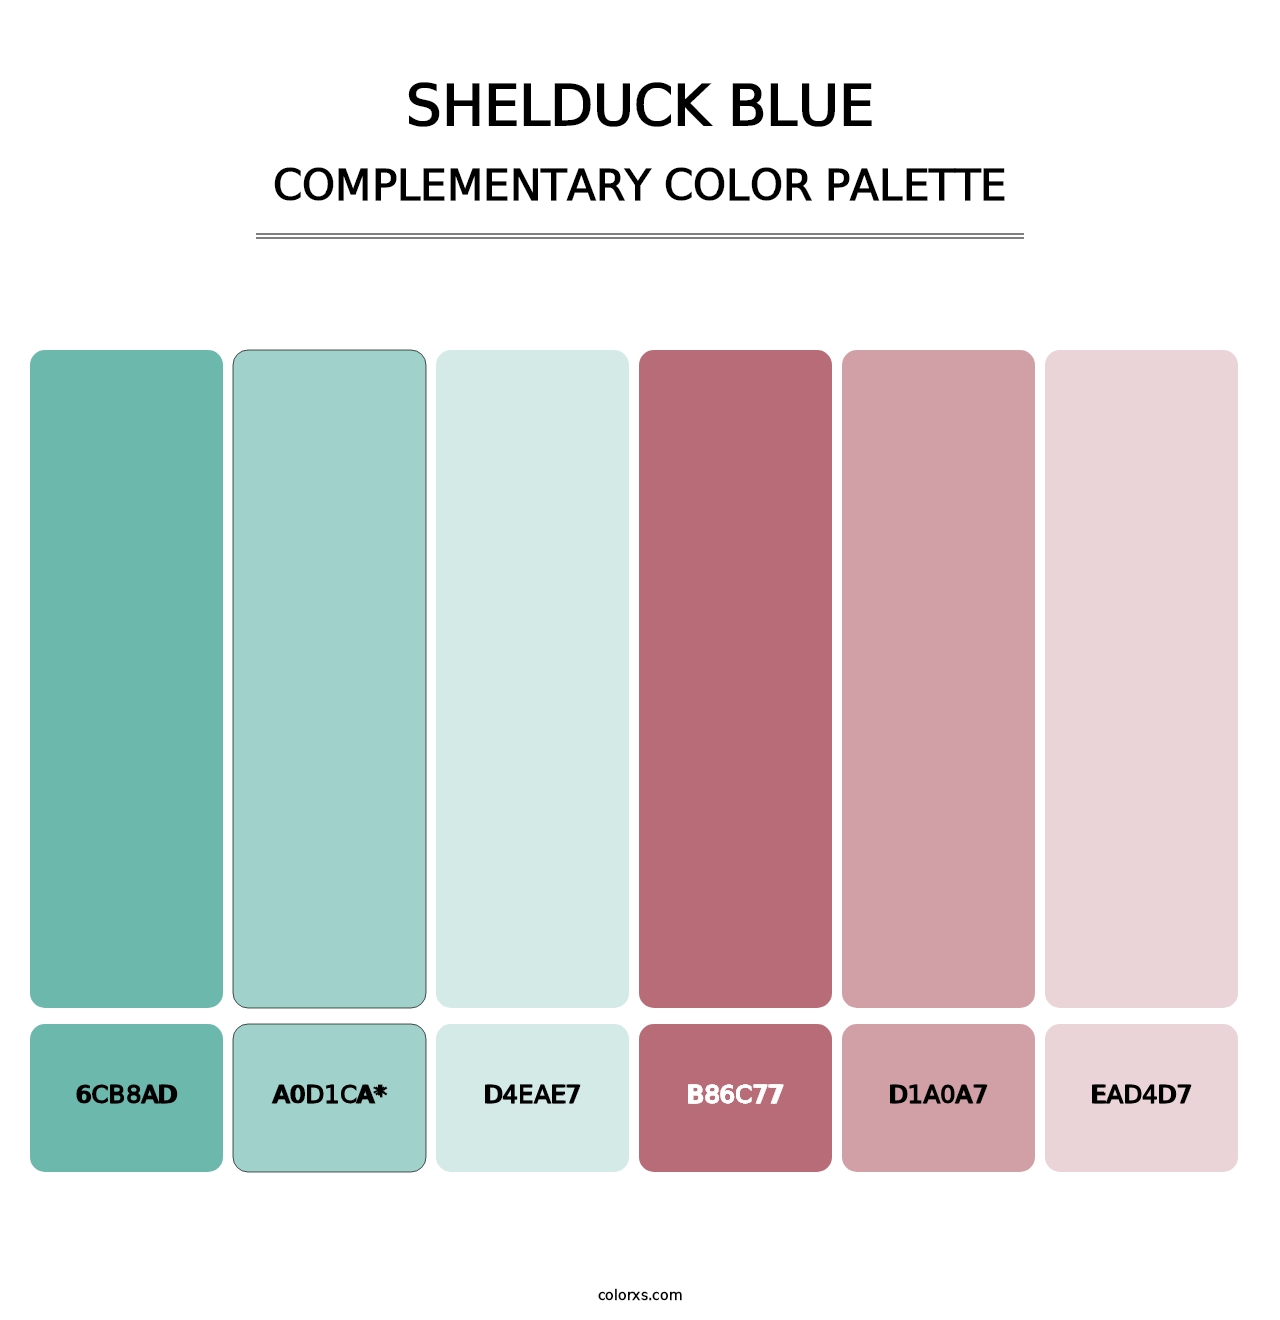 Shelduck Blue - Complementary Color Palette